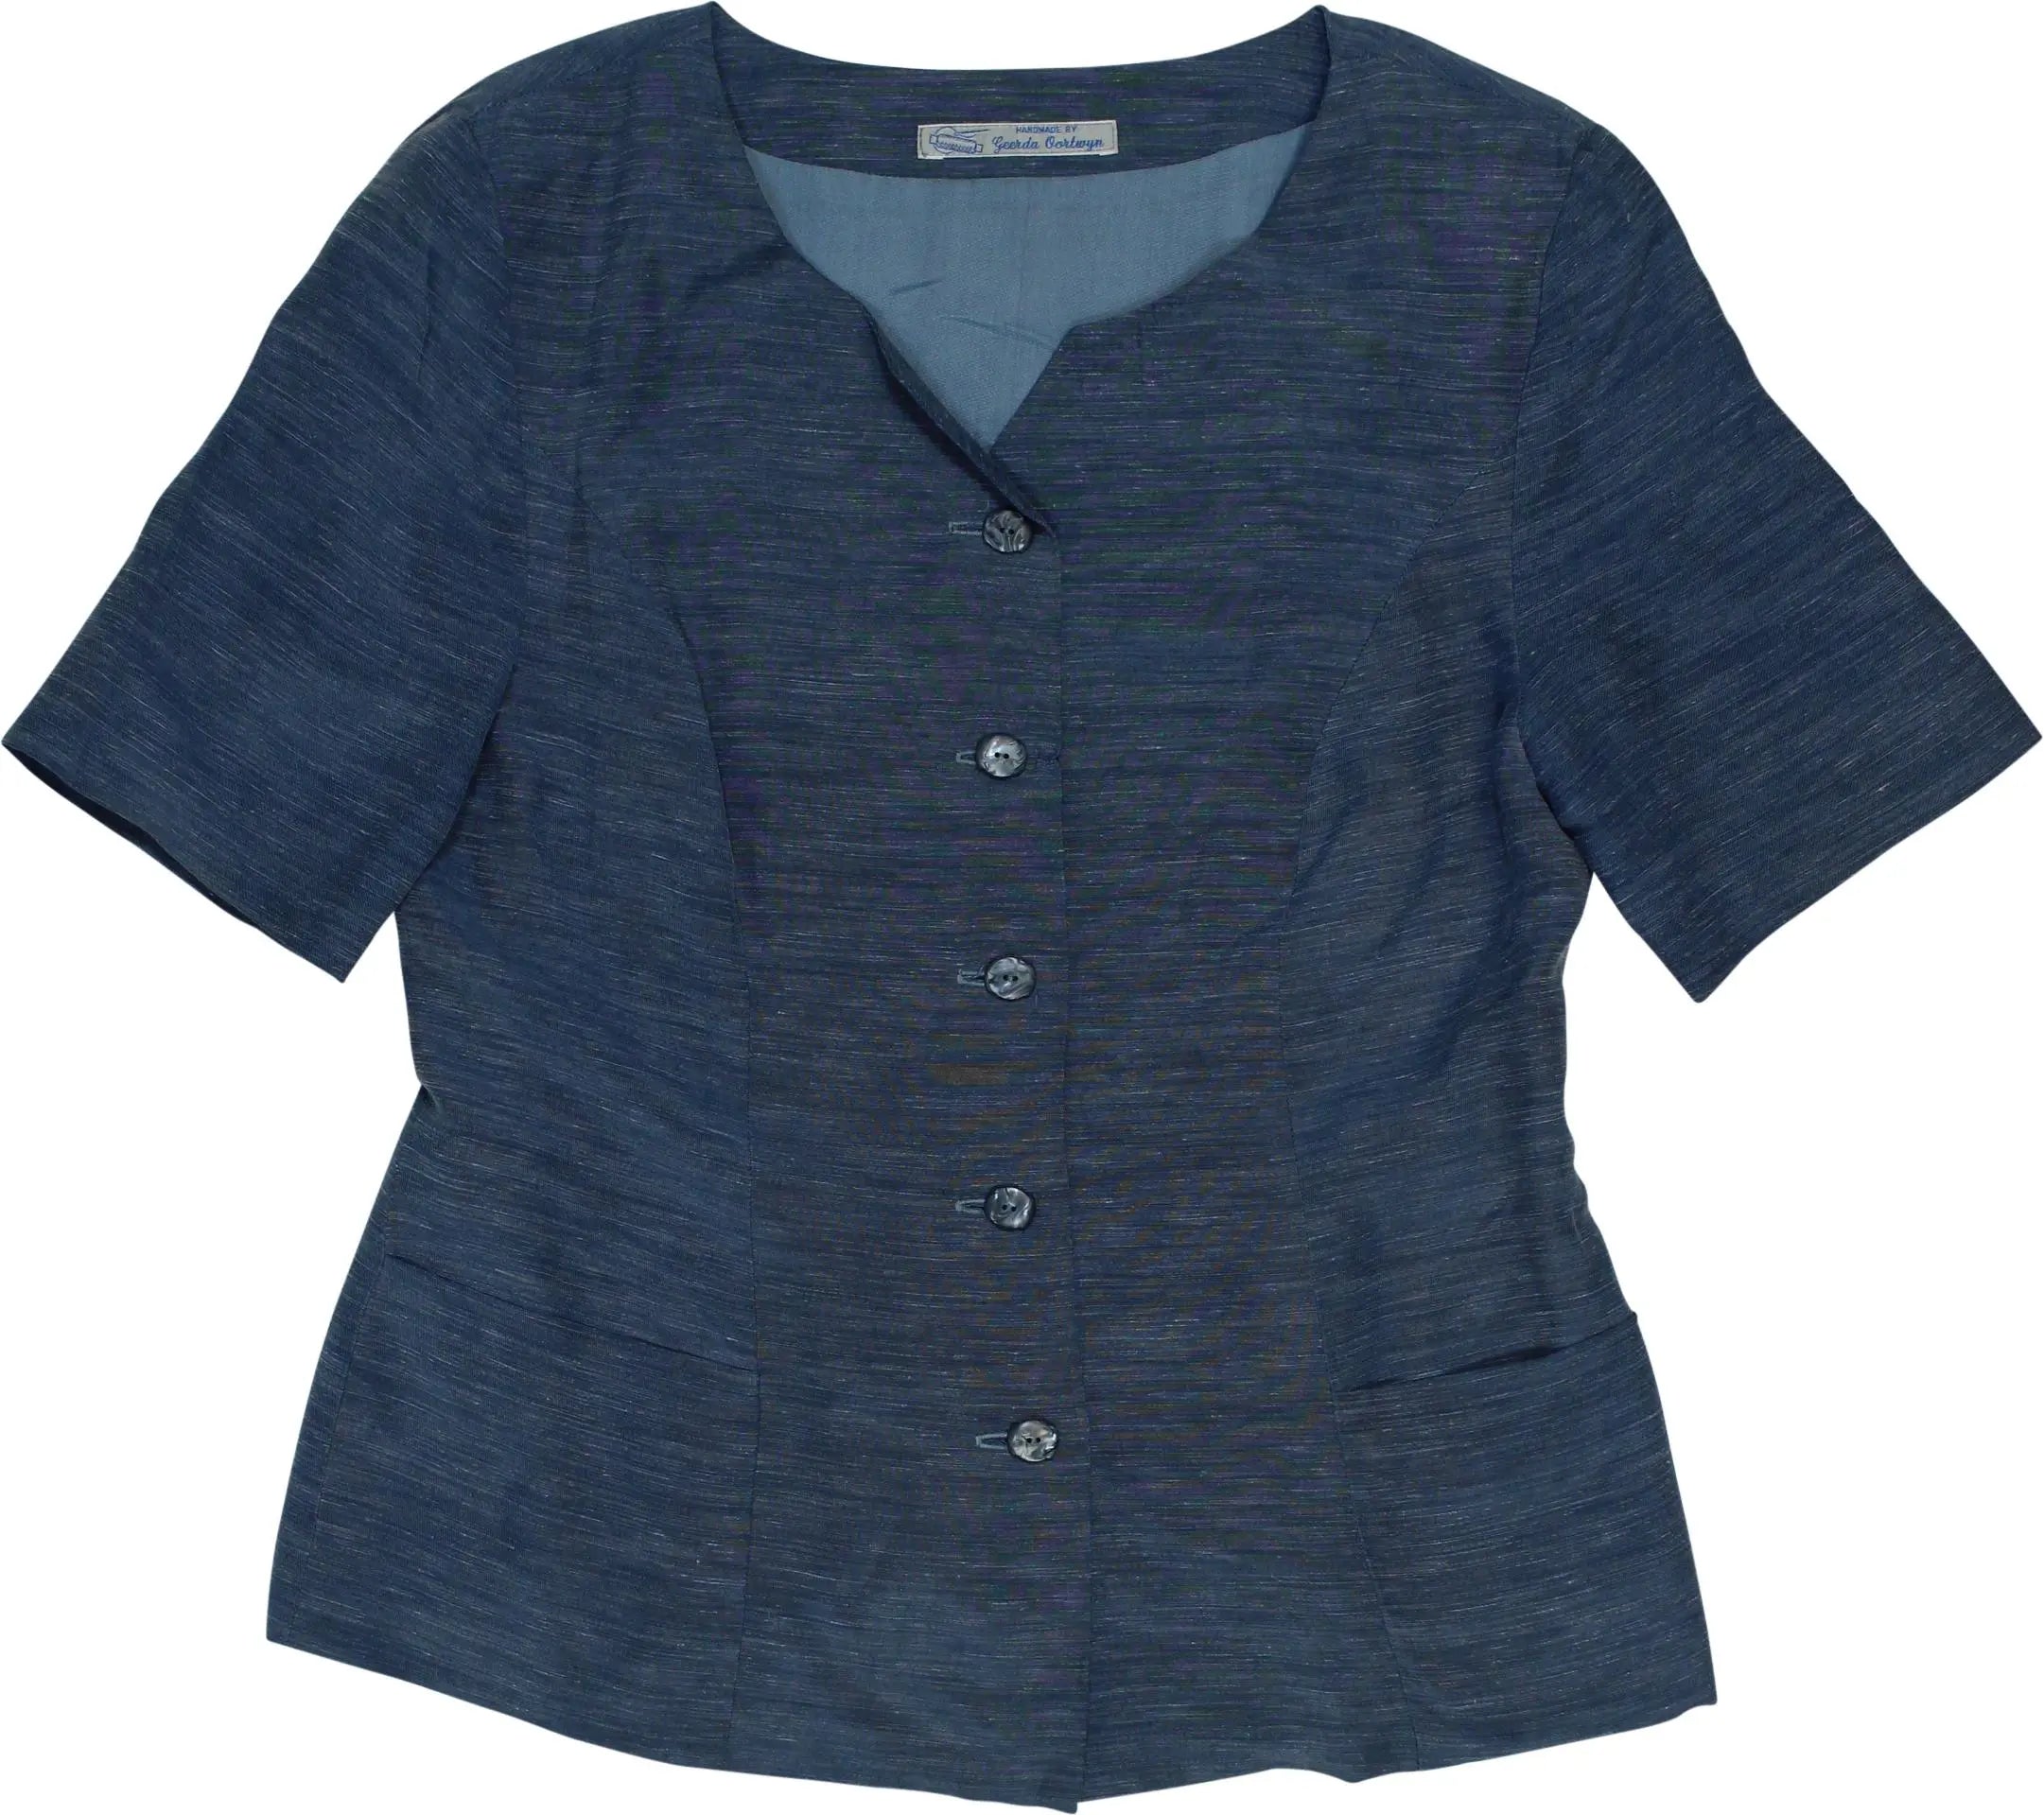 Handmade - Handmade Short Sleeve Blazer- ThriftTale.com - Vintage and second handclothing